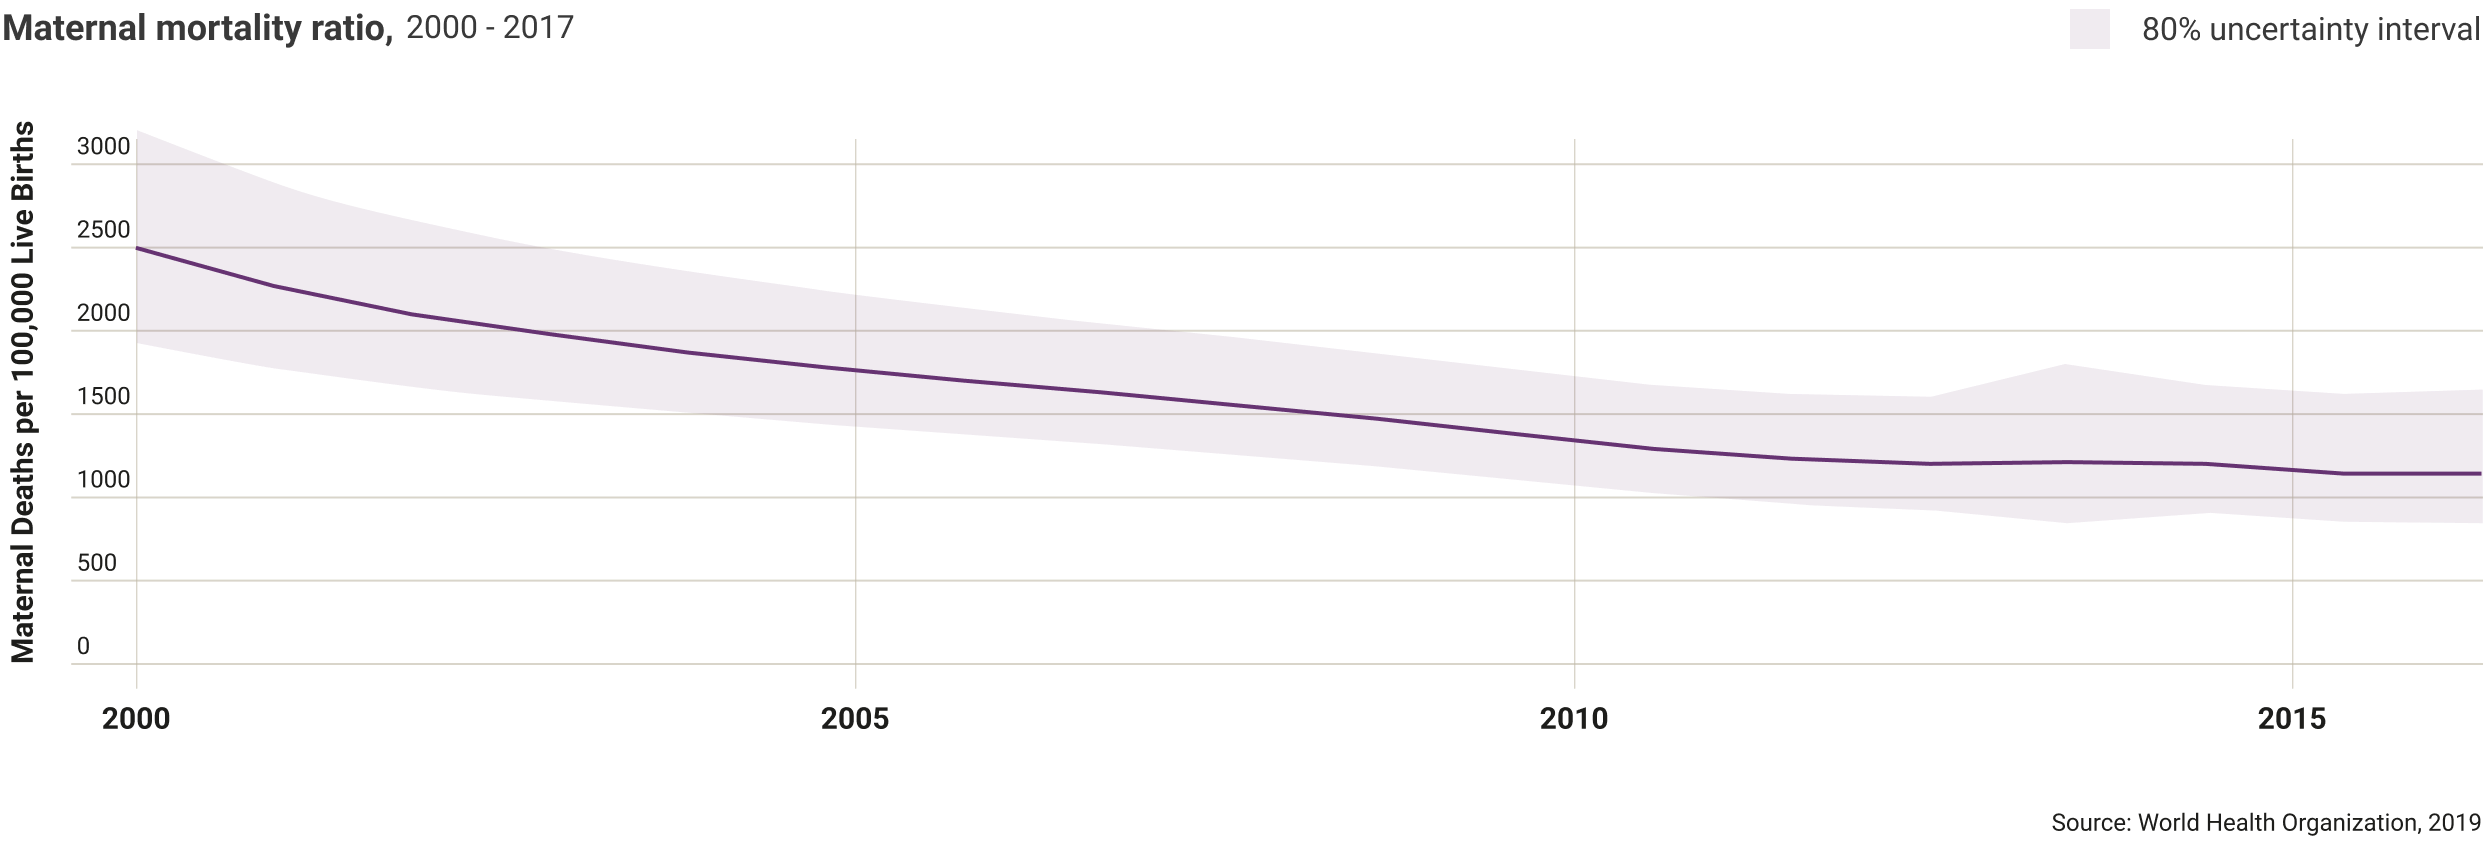 sierra-leone-maternal-mortality-ratio